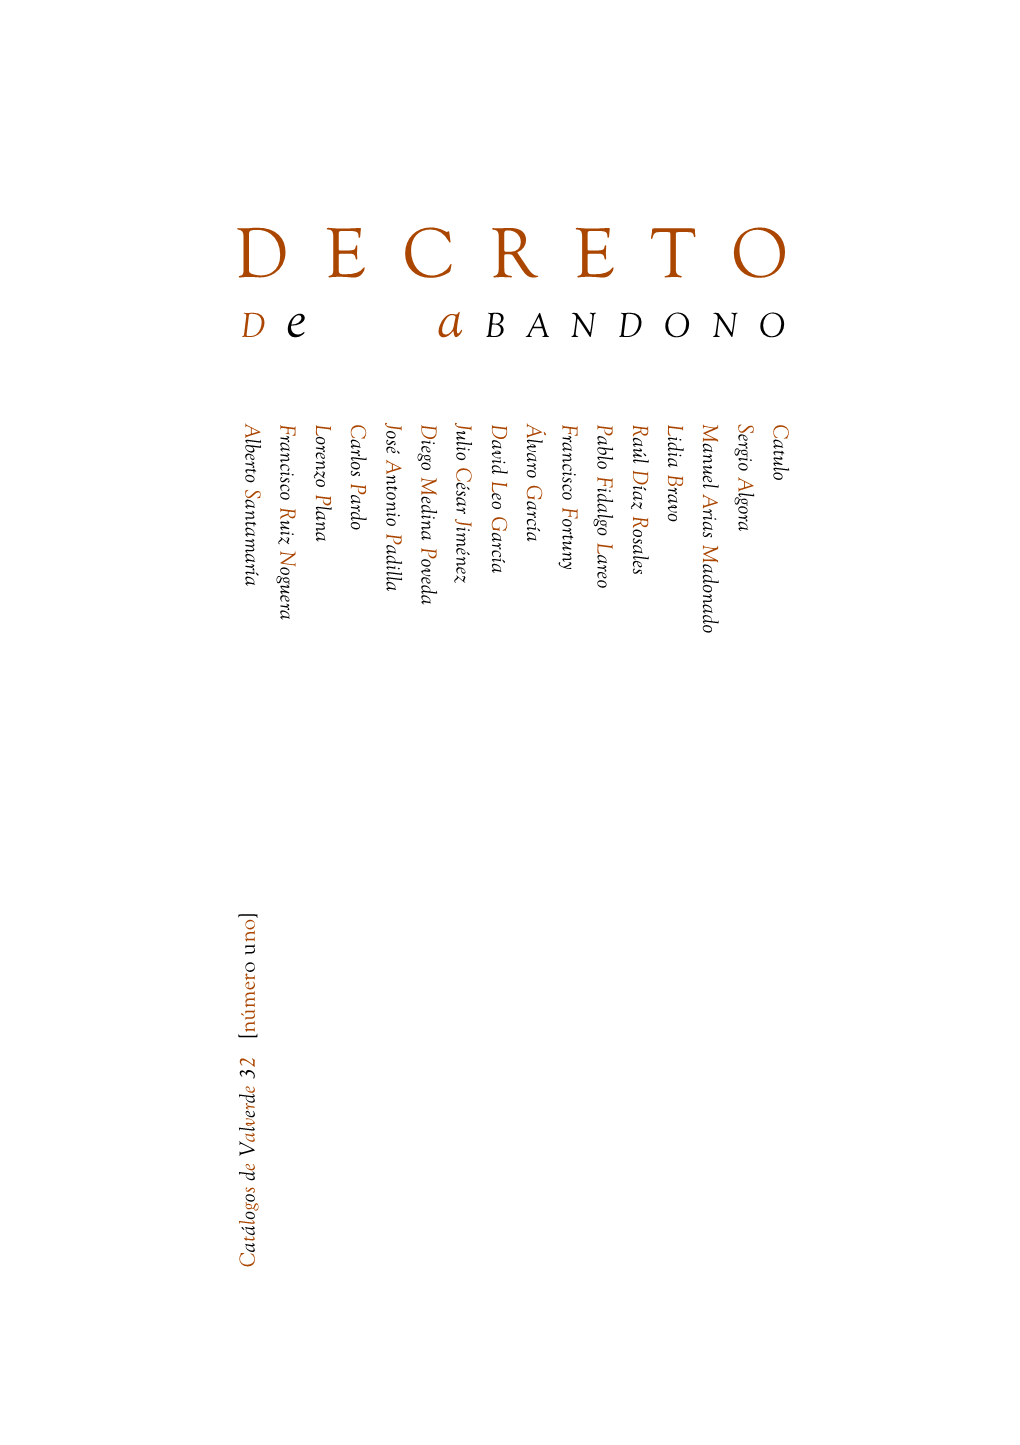 Catálogos De Valverde 32 Número Uno: Decreto De Abandono Info@Catalogosdevalverde32.Es